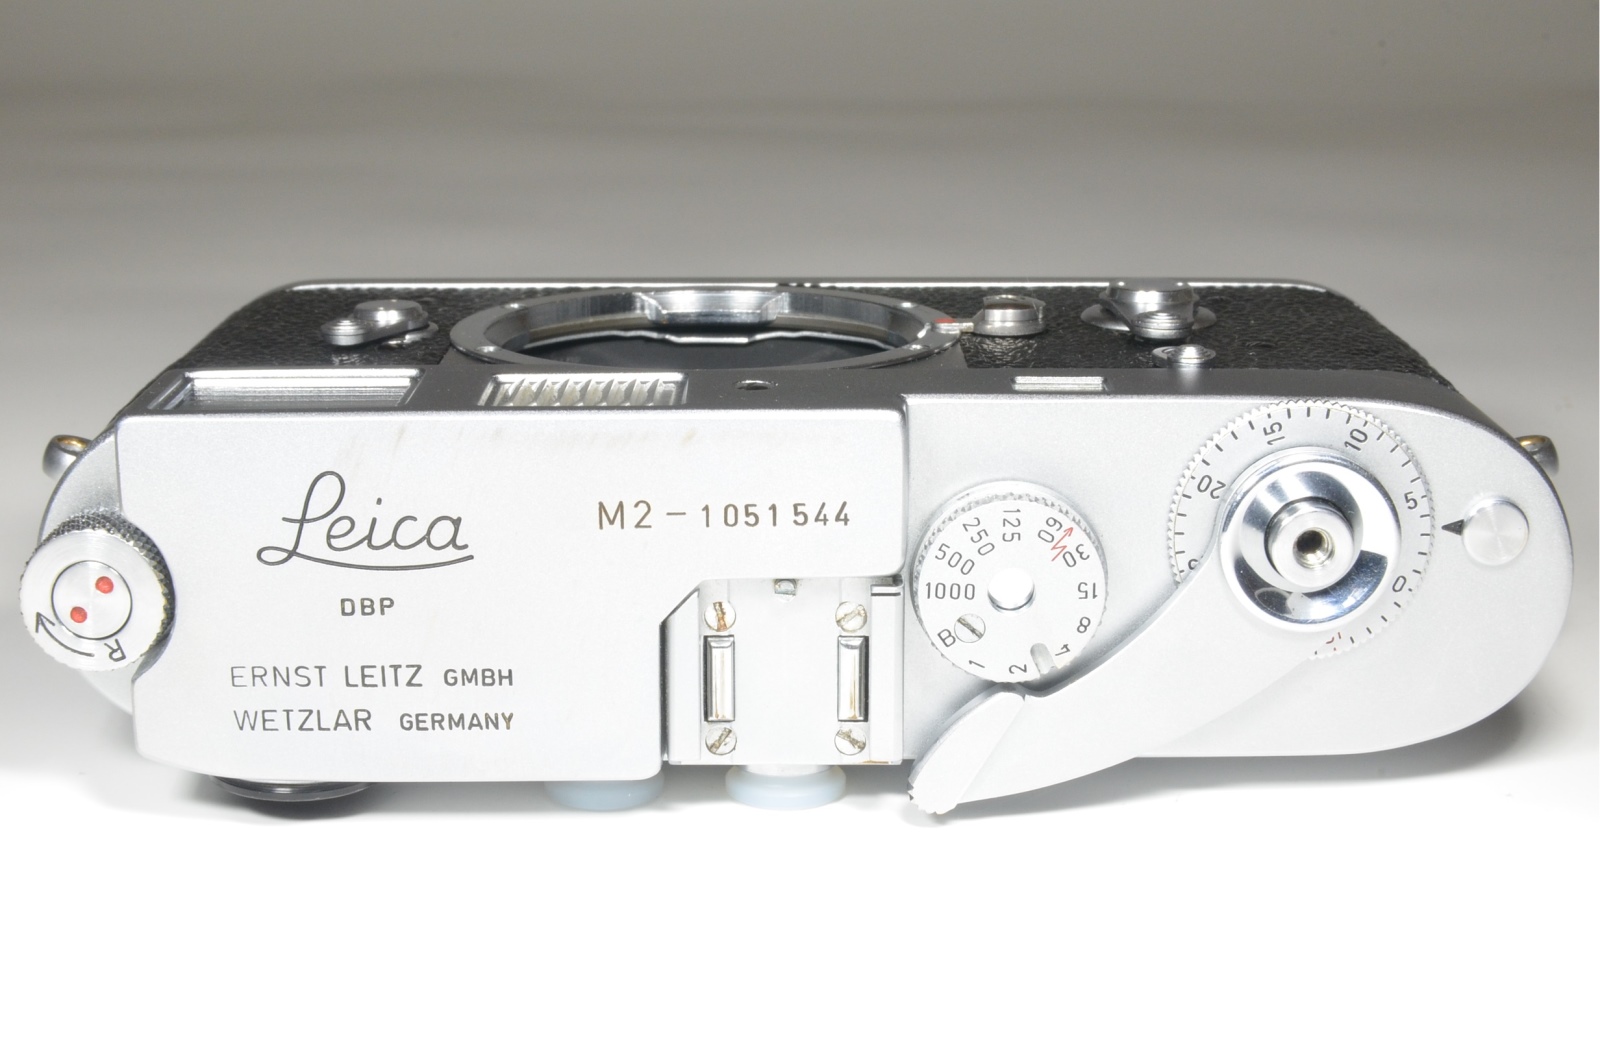 leica m2 35mm rangefinder film camera s/n 1051544 self timer